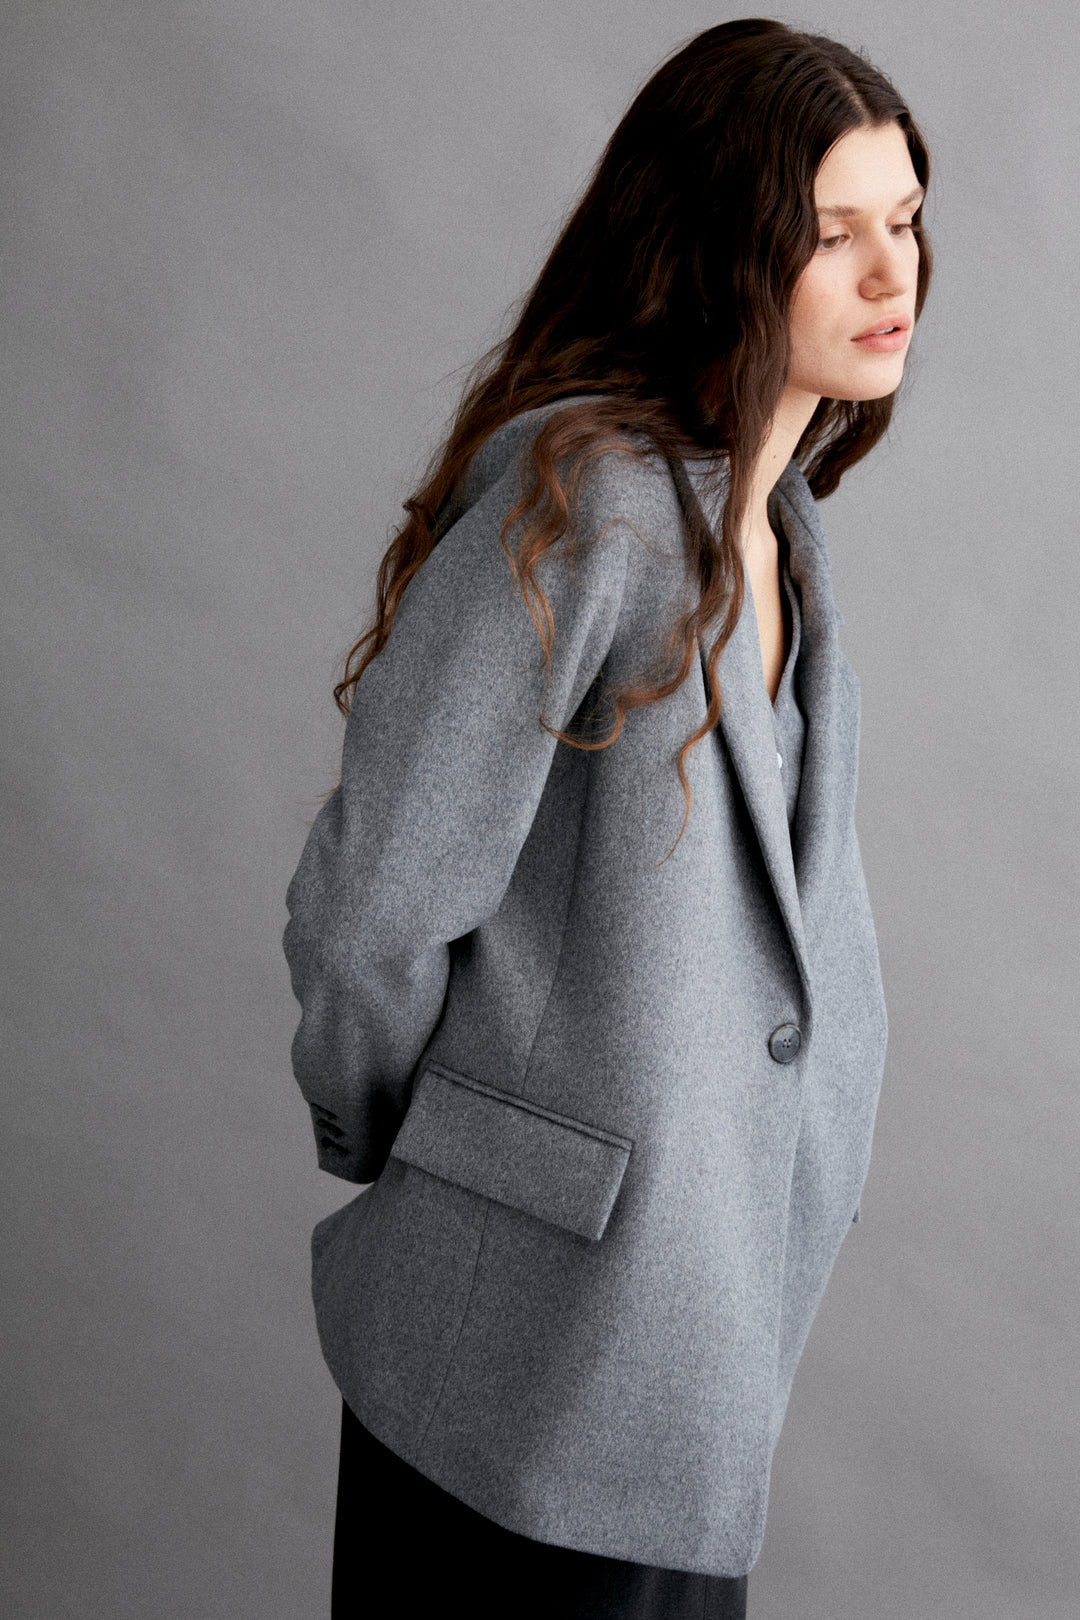 ROY - Grey Oversized Wool Blazer Jacket